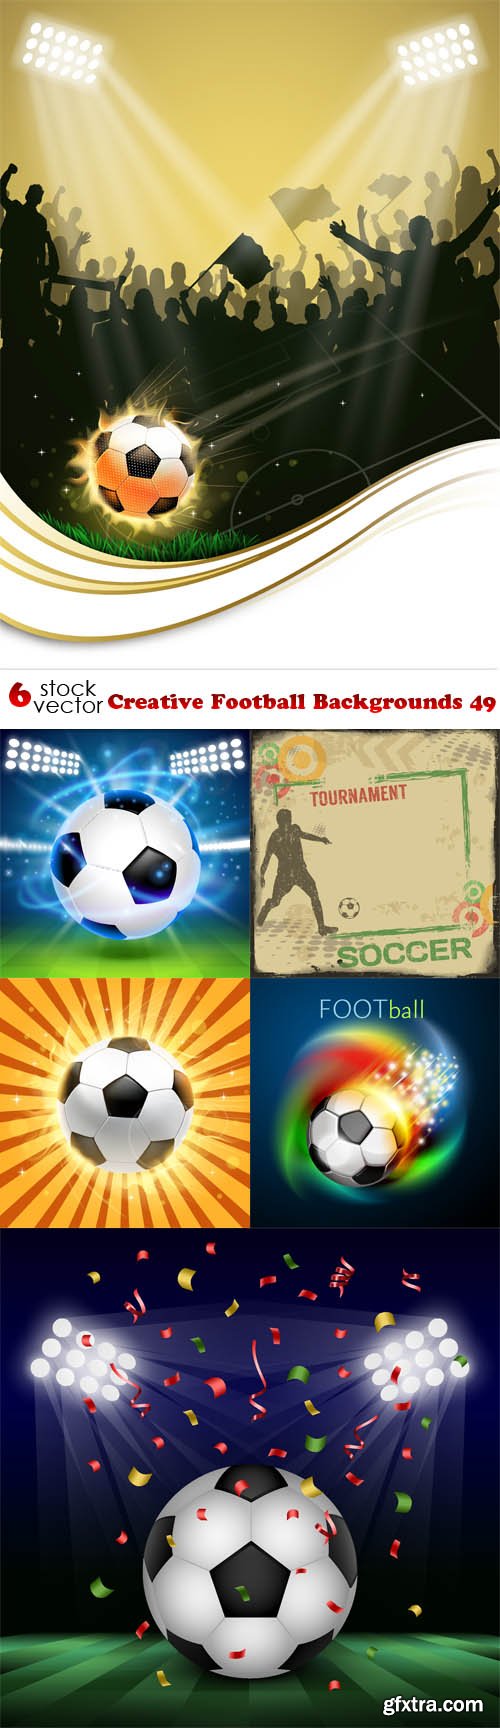 Vectors - Creative Football Backgrounds 49